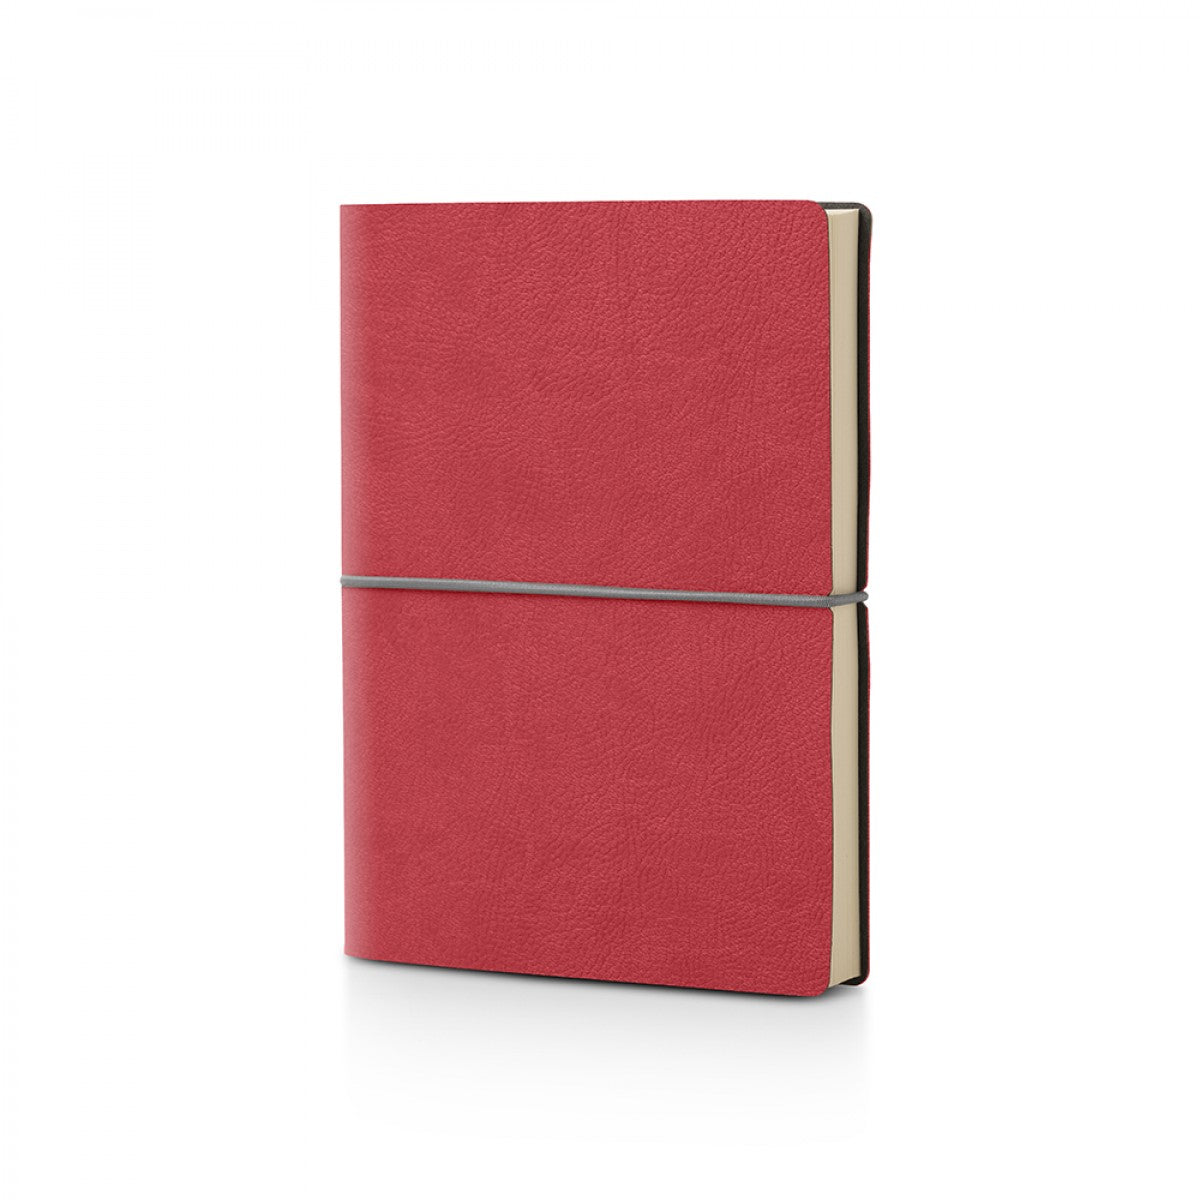 Ciak Smartbook Note Book Red 6" by 8"